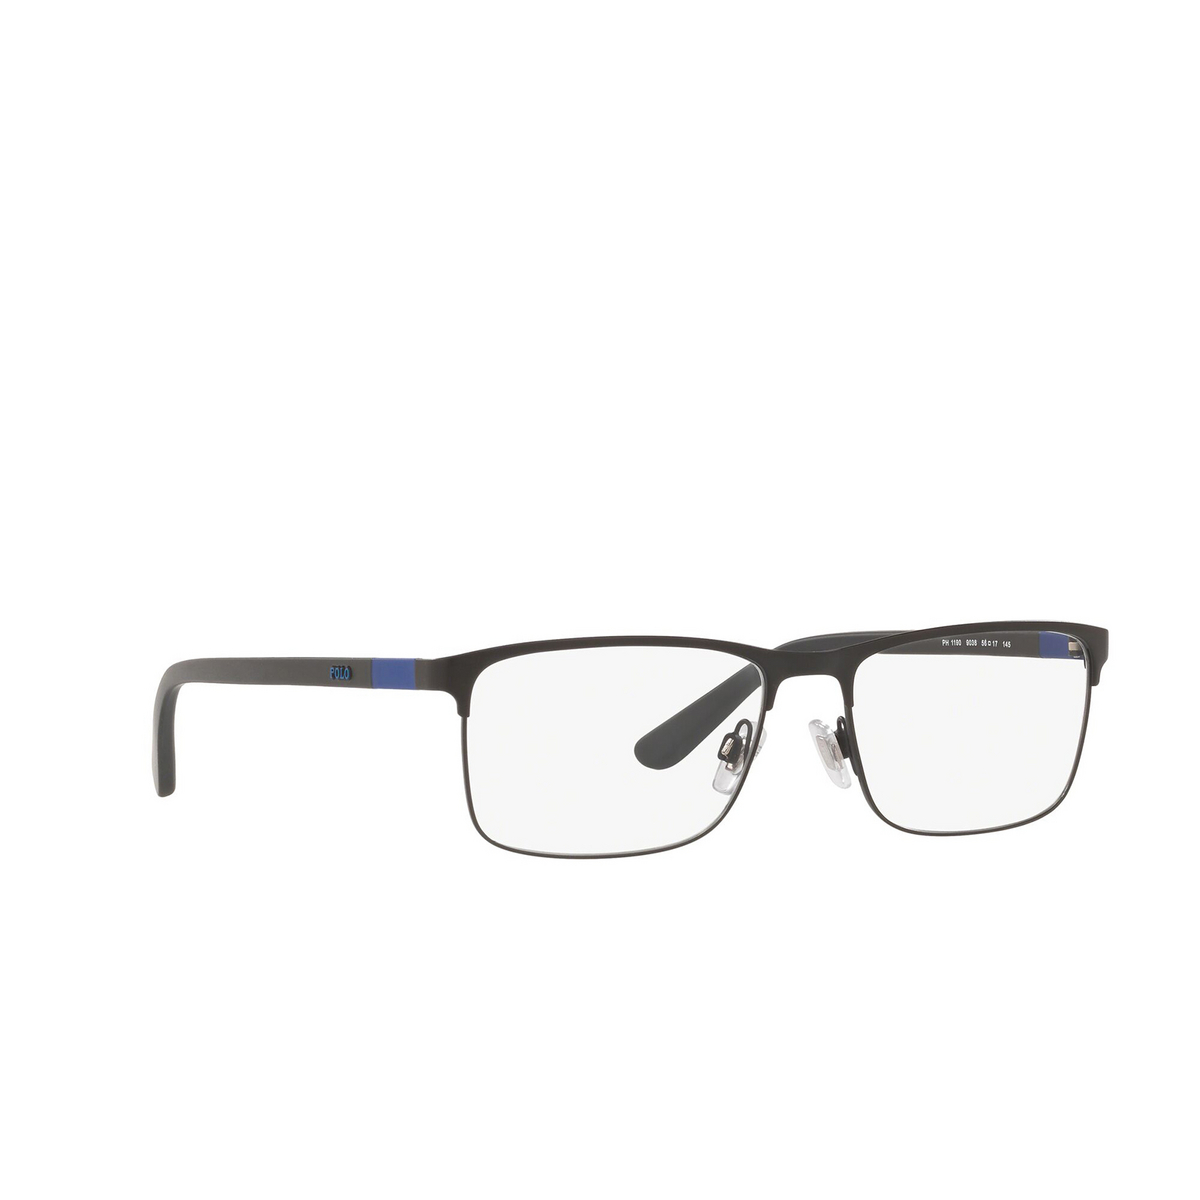 Polo Ralph Lauren® Rectangle Eyeglasses: PH1190 color Matte Black 9038 - three-quarters view.